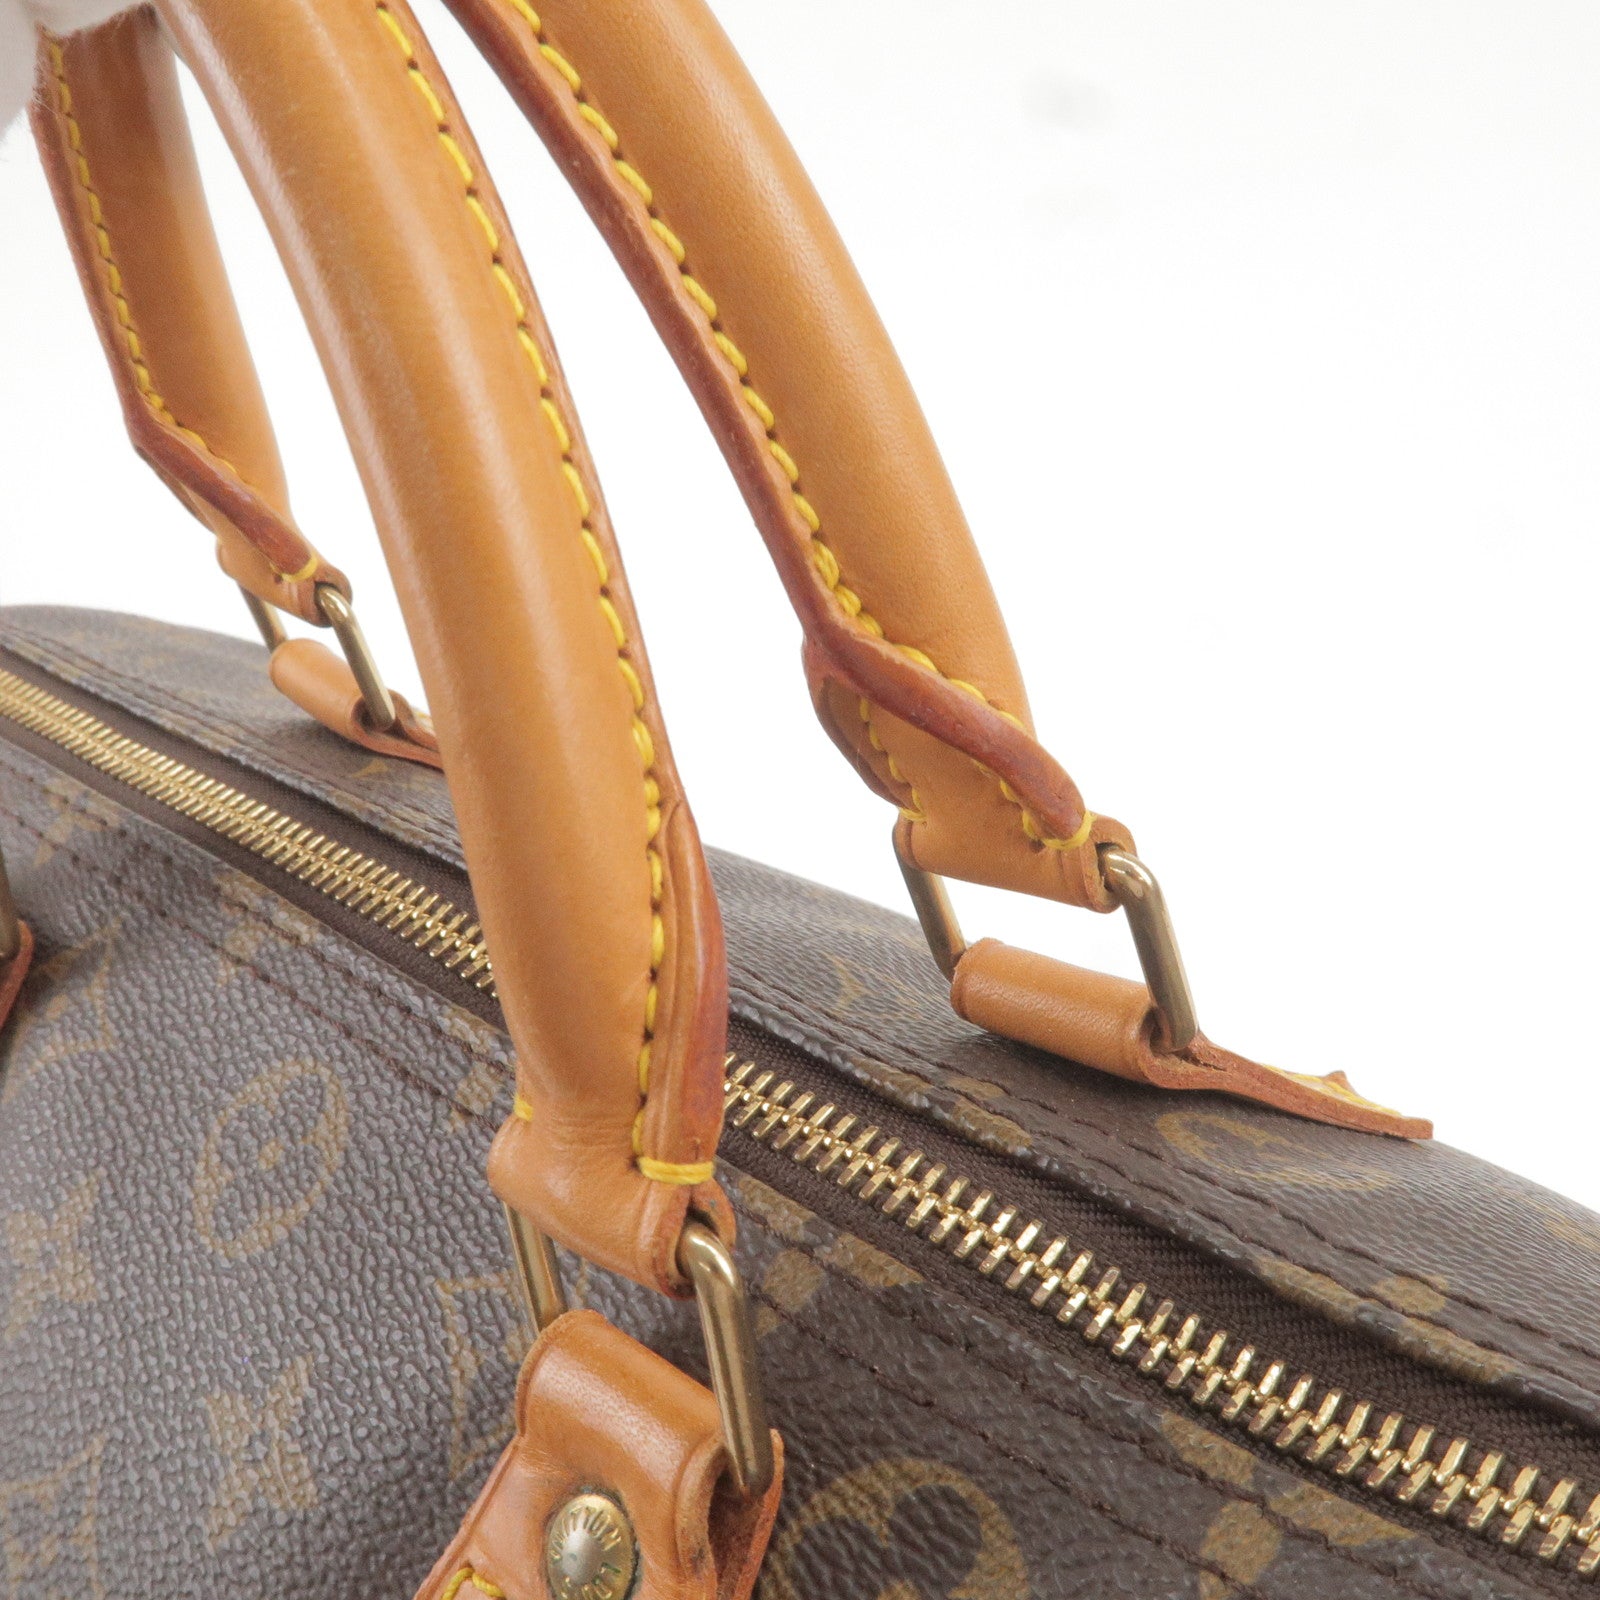 Louis Vuitton 2011 Pre-owned Claudia Handbag